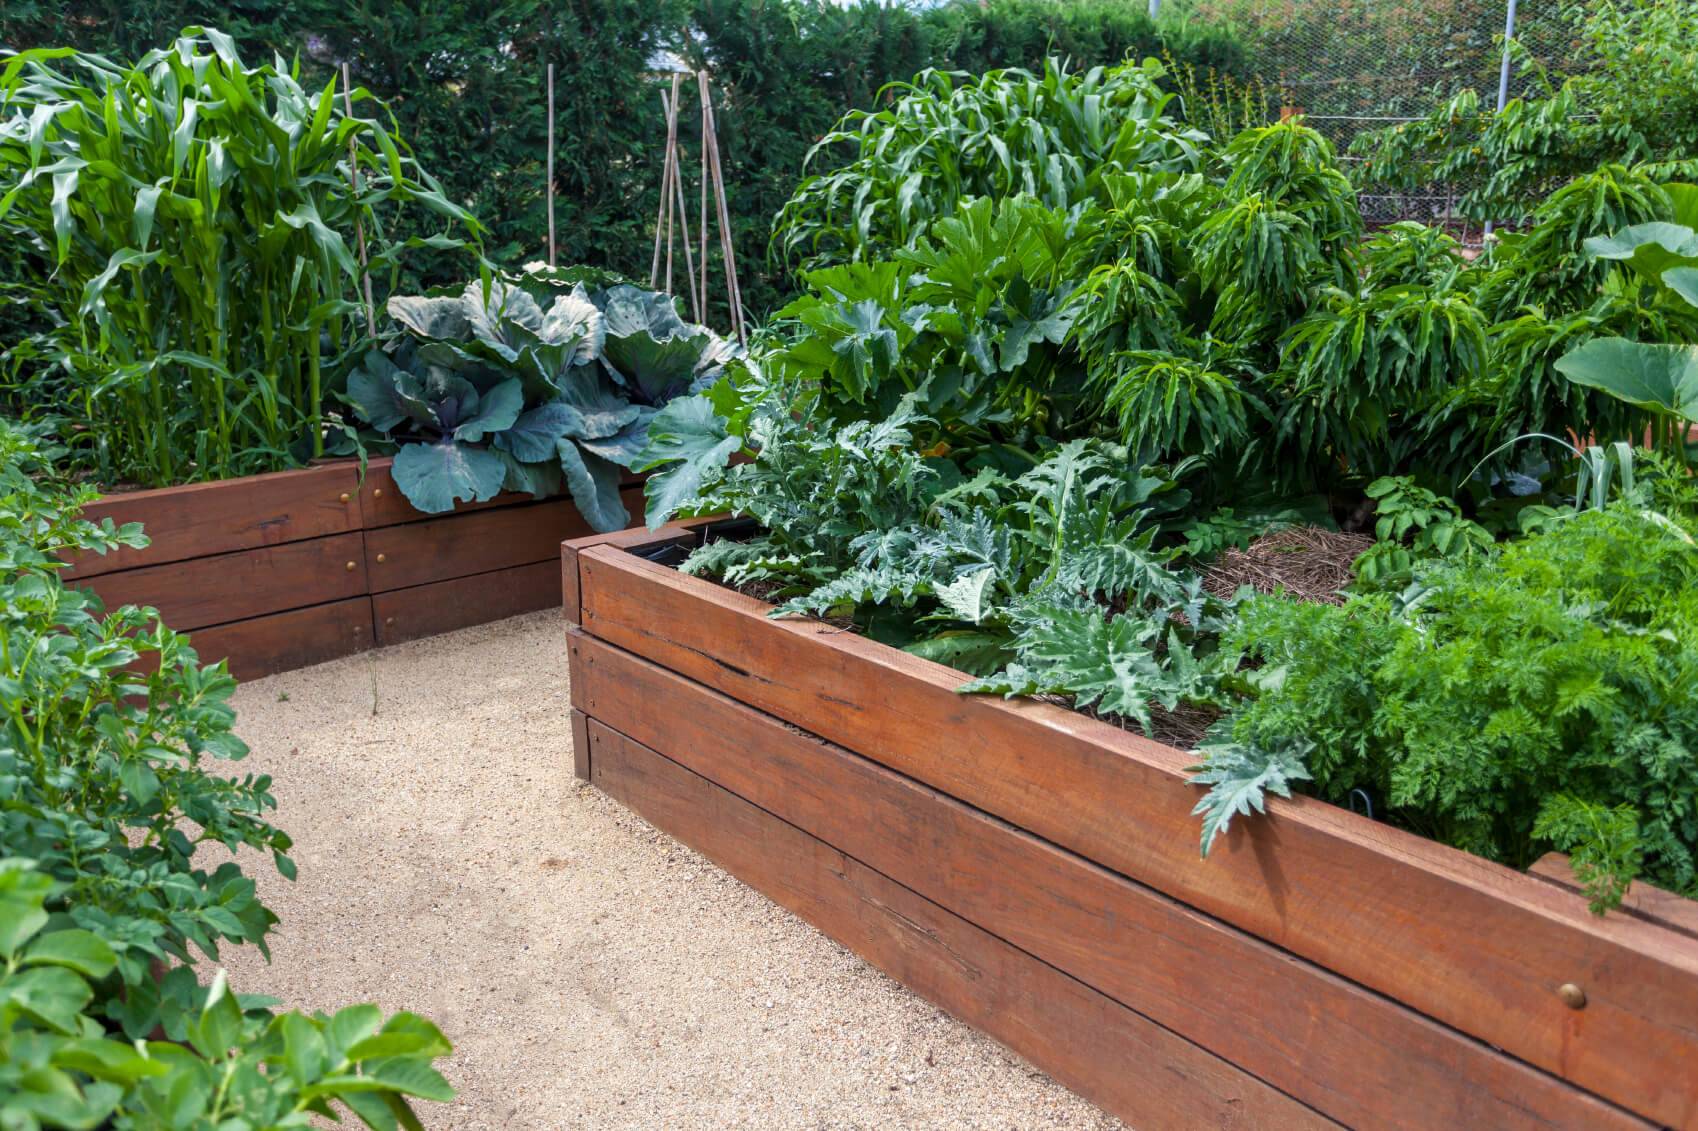 Diy Raised Garden Beds Ideas